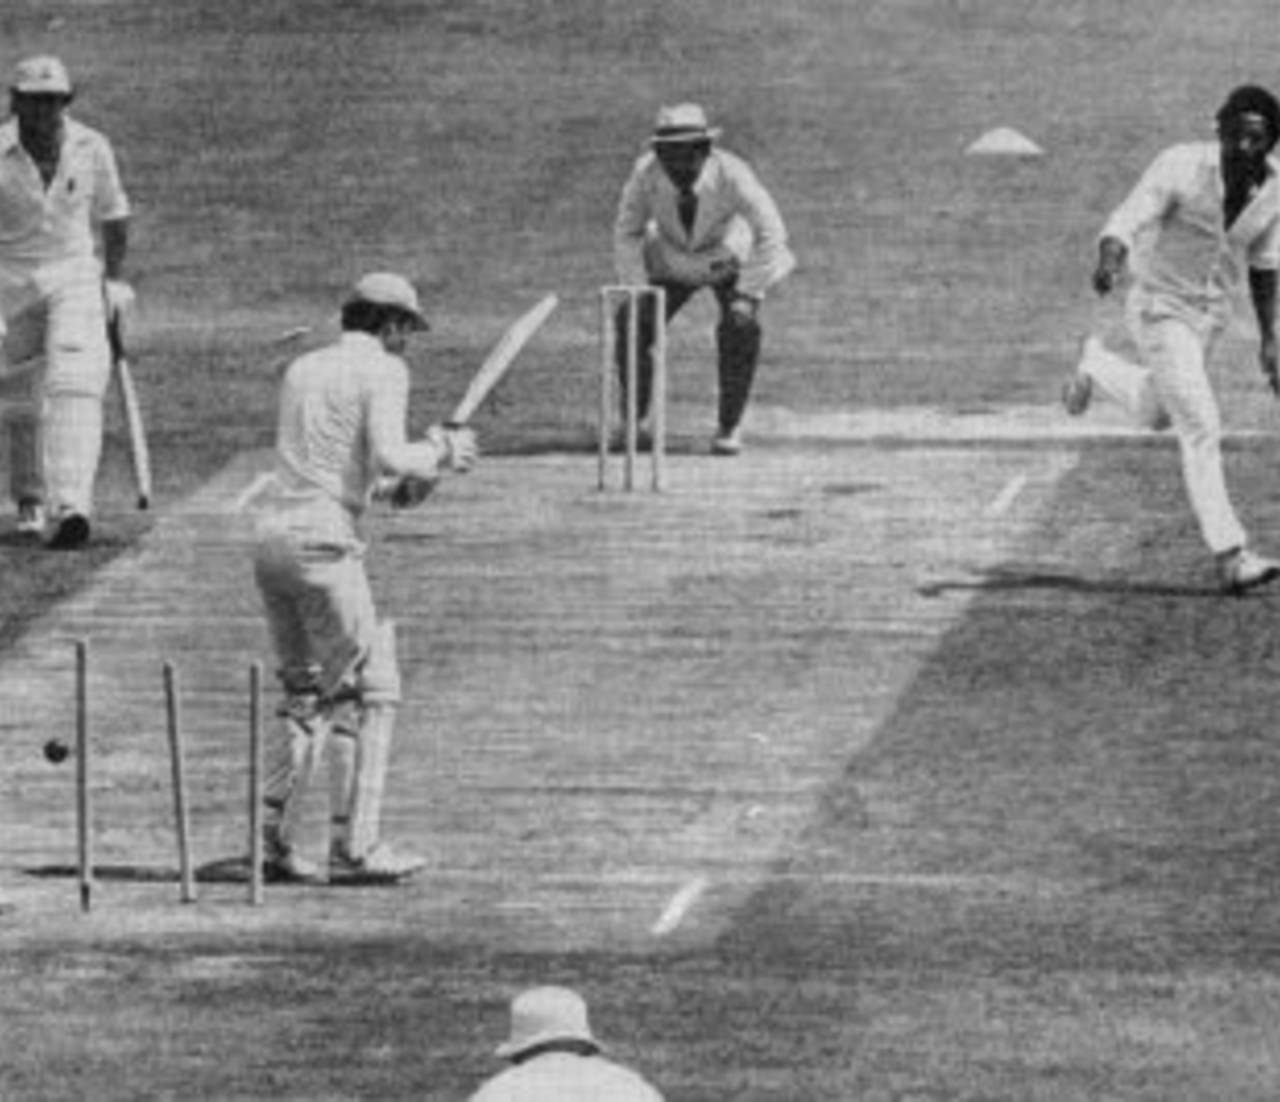 If it wasn't the stumps flying, it was batsmen getting hit when Roberts bowled&nbsp;&nbsp;&bull;&nbsp;&nbsp;ESPNcricinfo Ltd